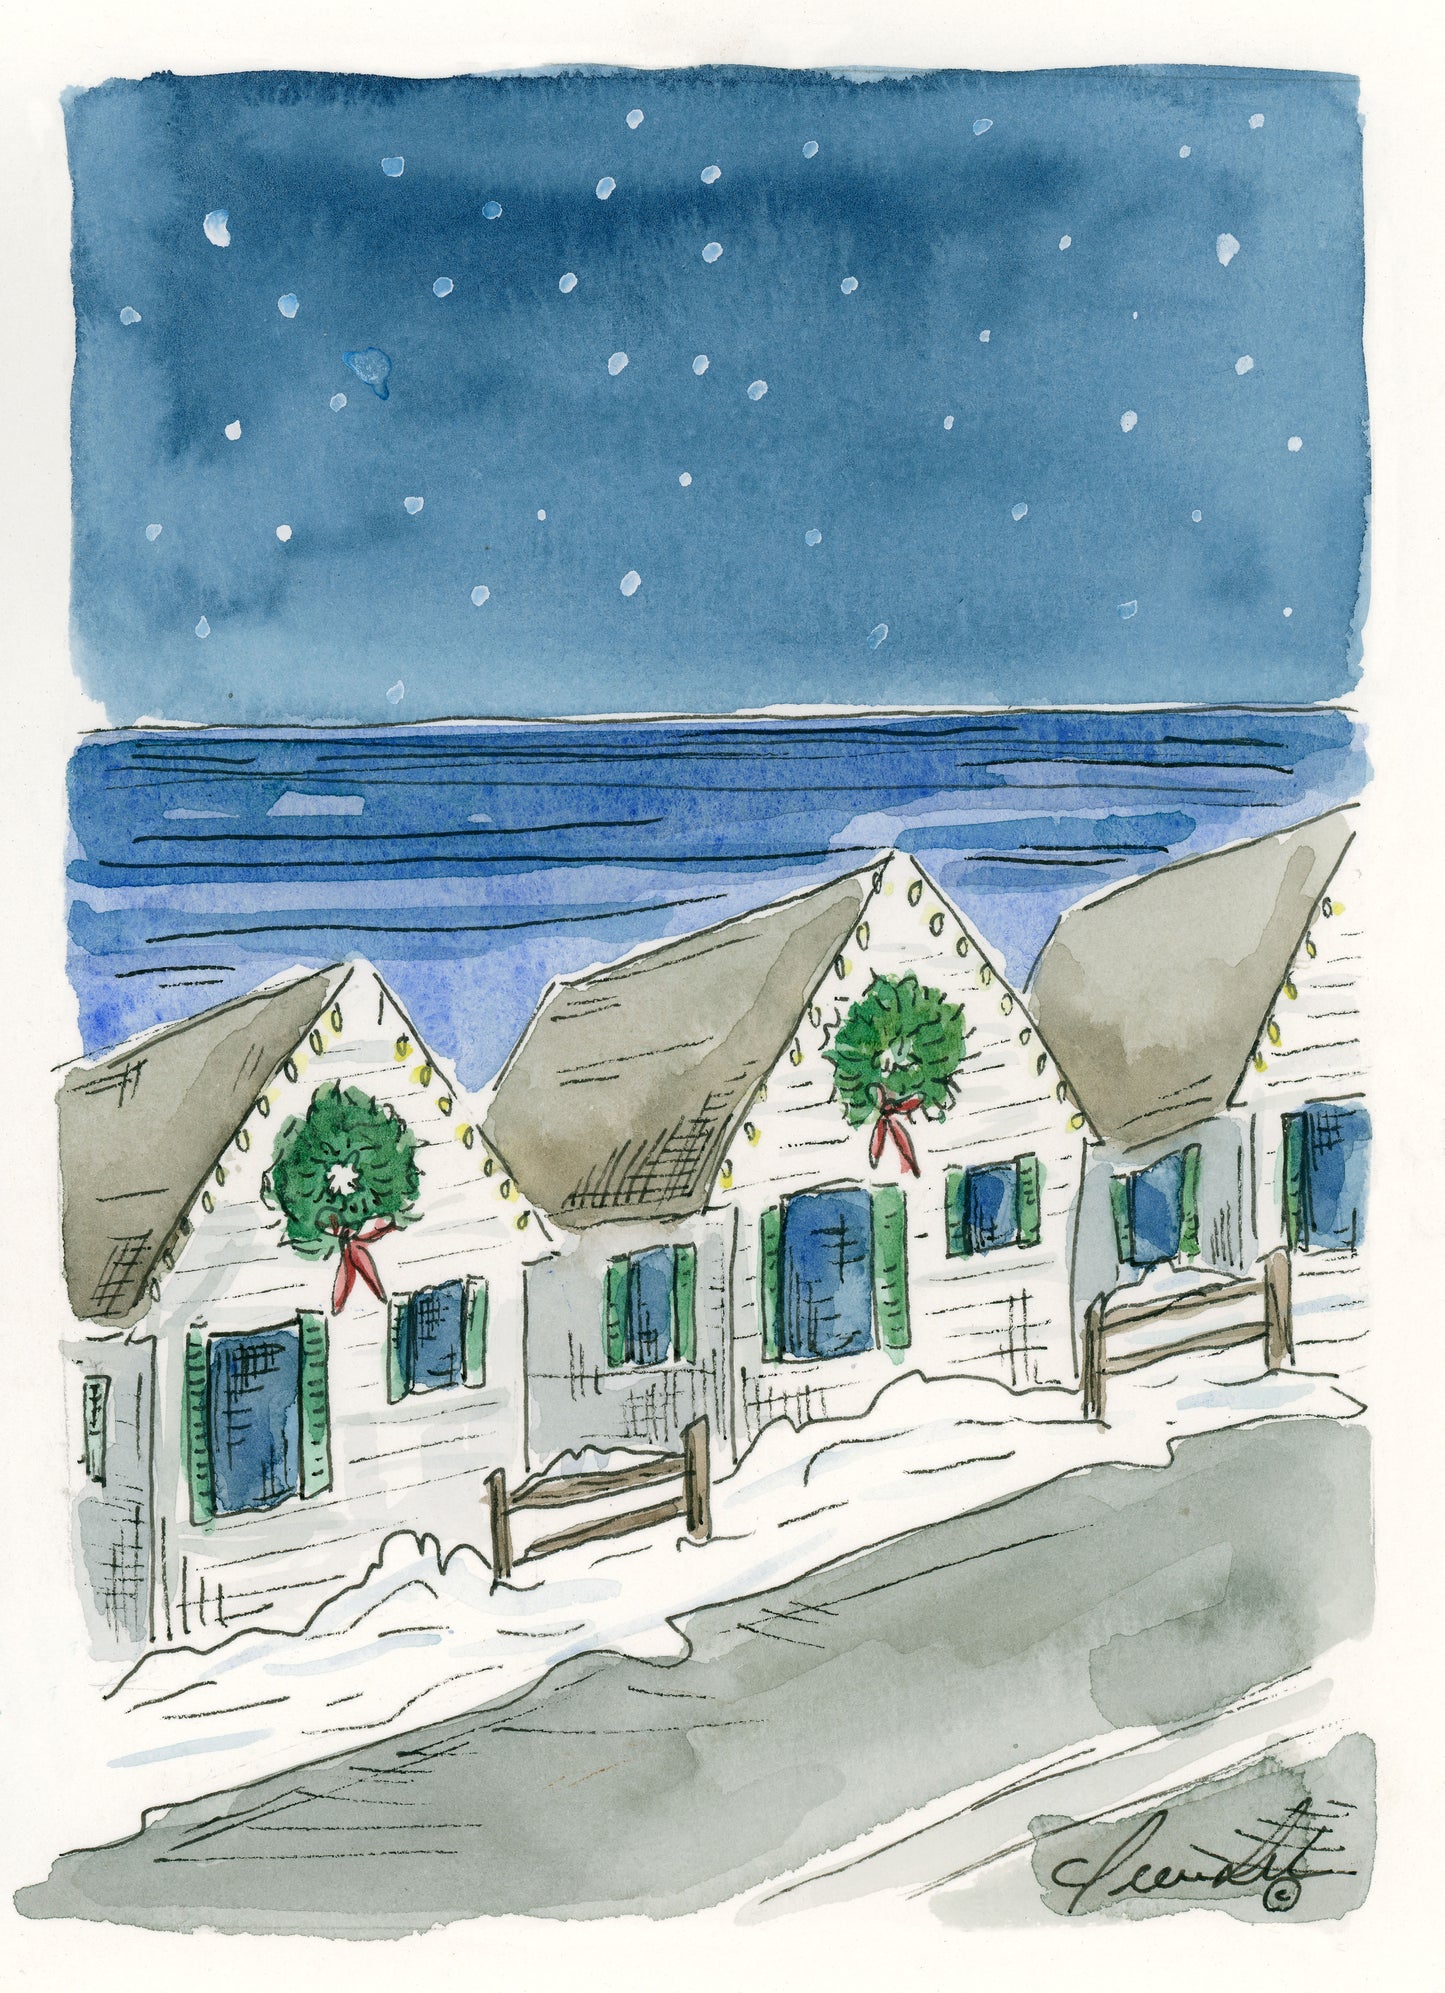 "Snow Days on Cape Cod" Holiday Card Box Set